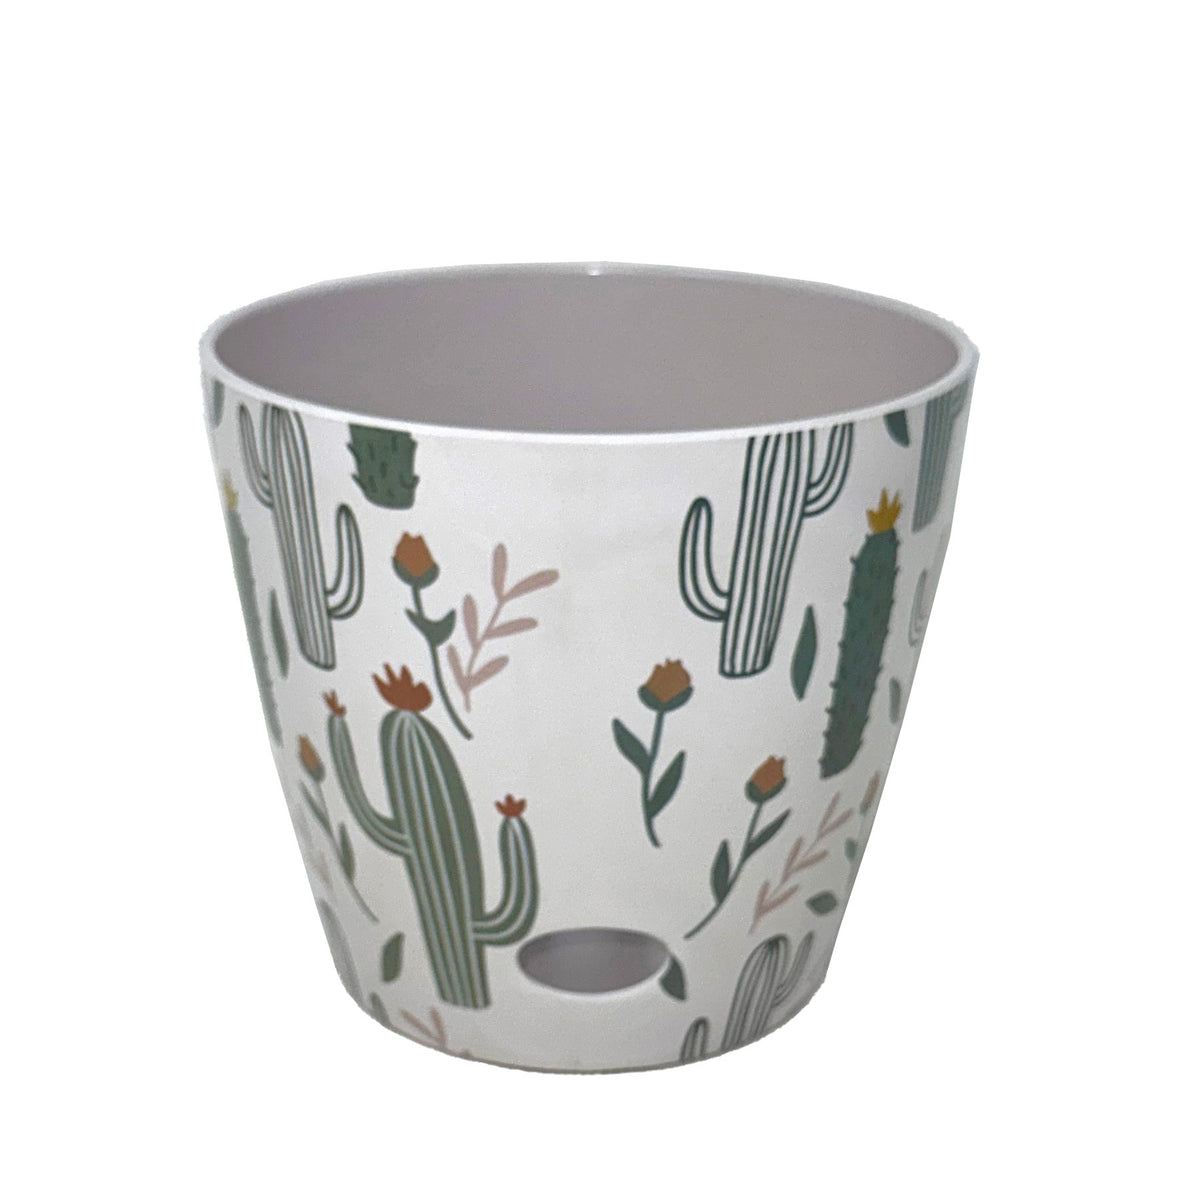 7&quot; Cactus Round Self-Watering Bamboo Pot